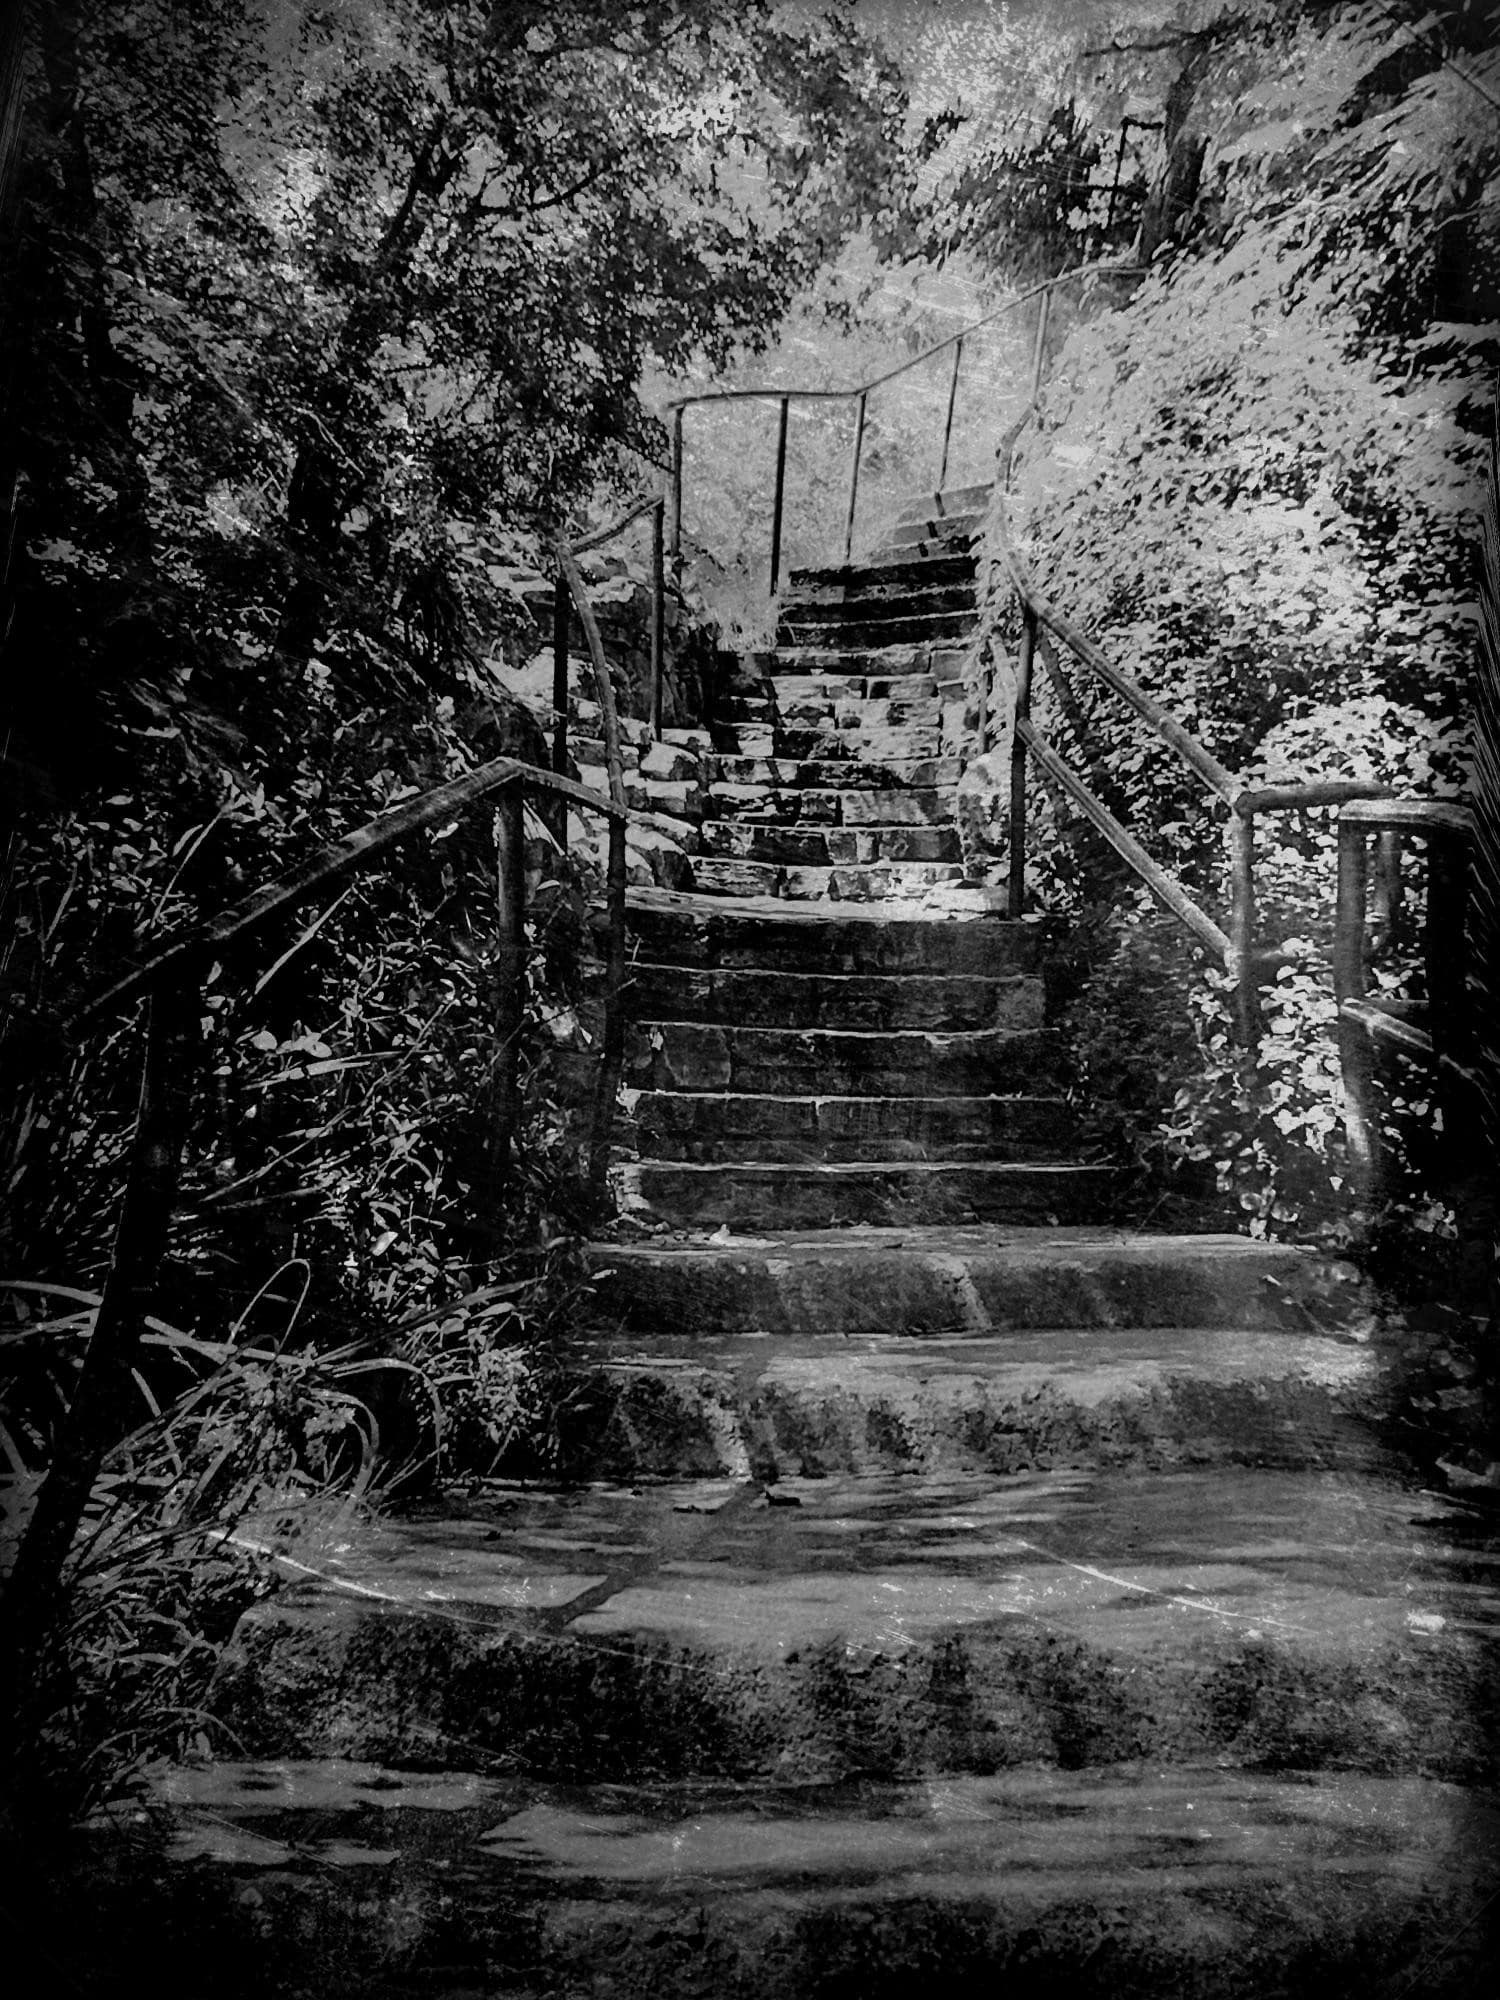 Stairway at Arboretum.